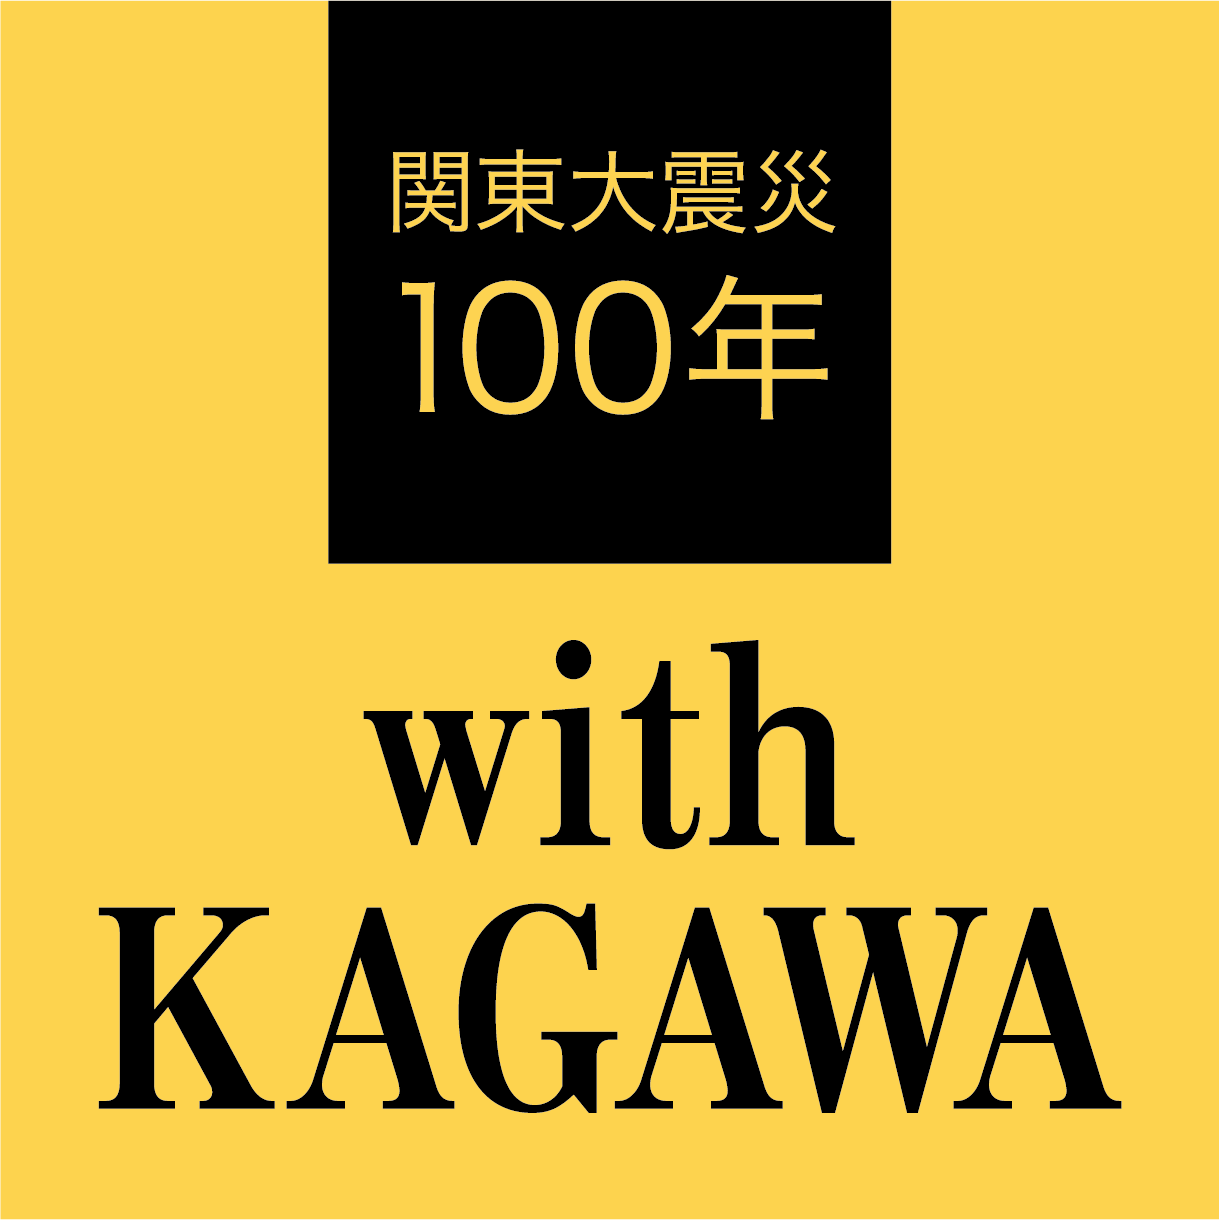 関東大震災100年 with KAGAWA